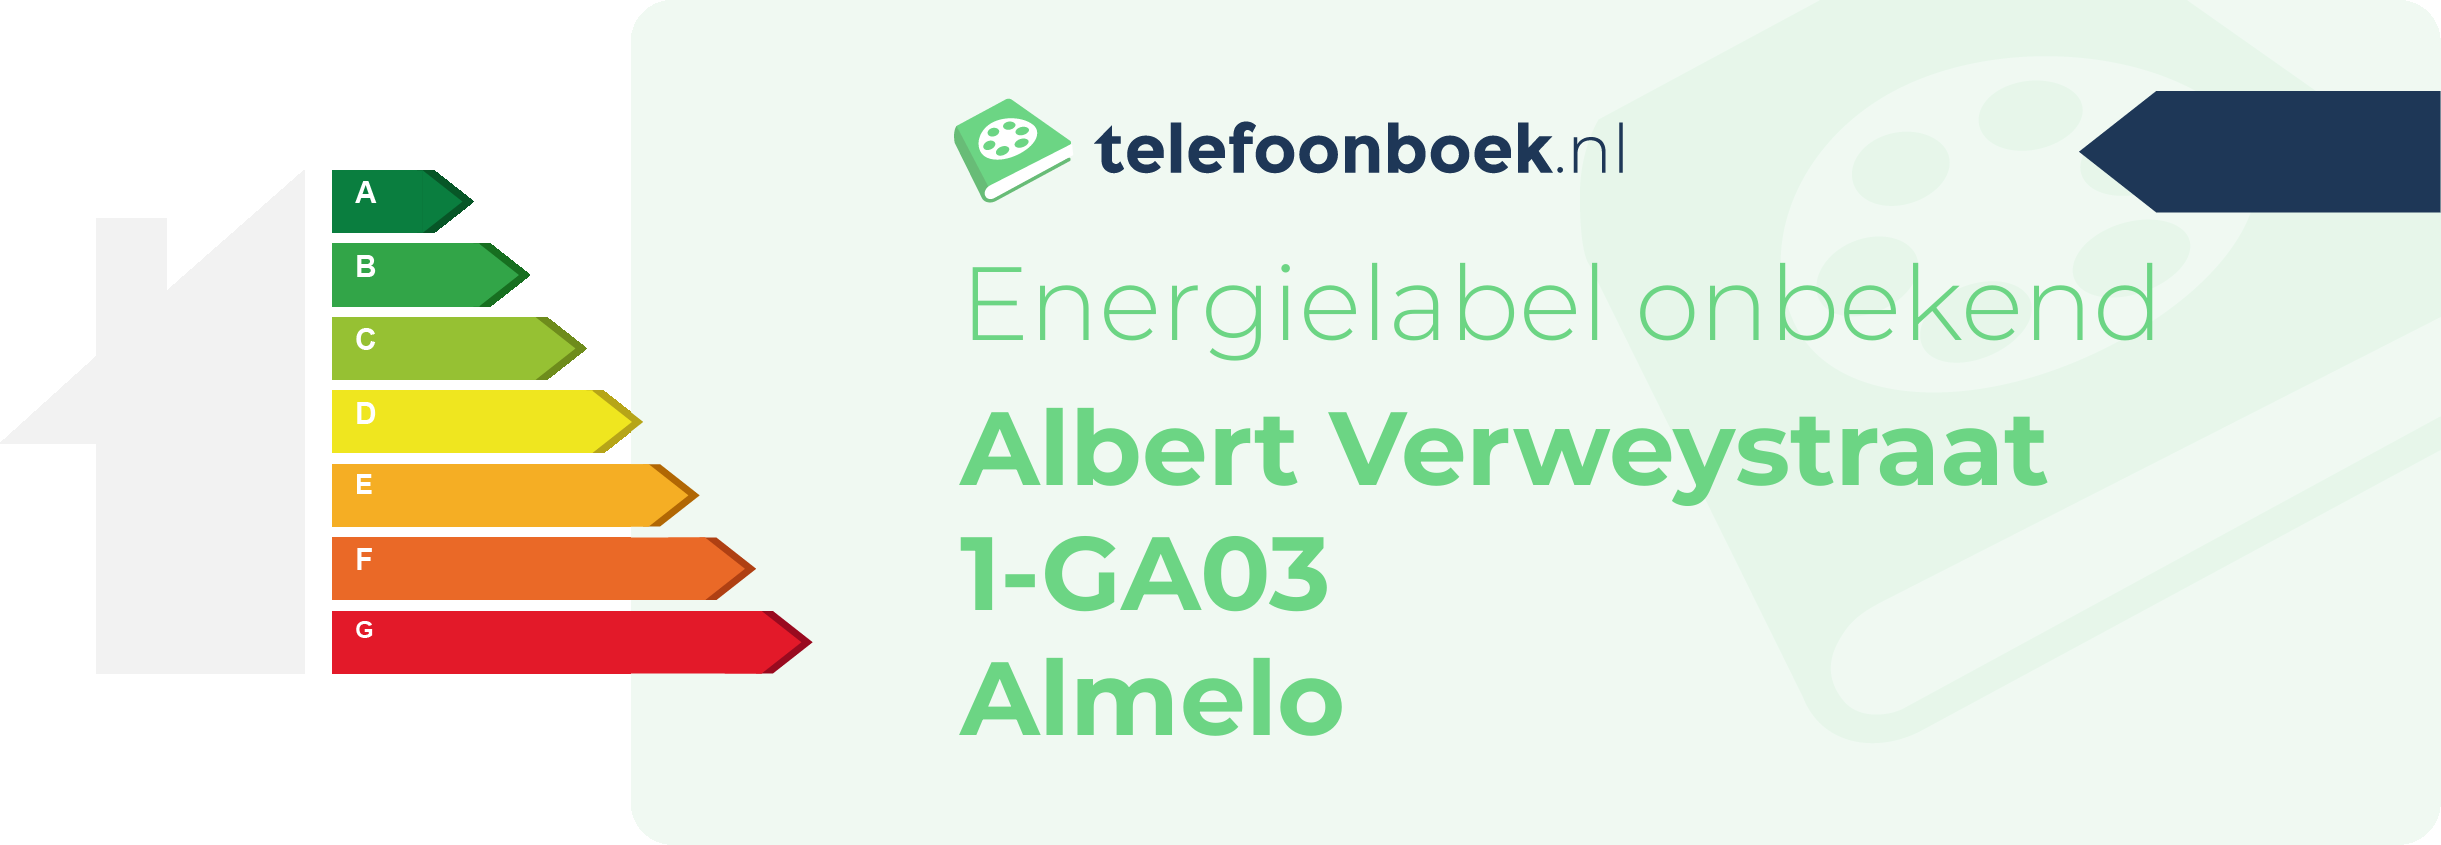 Energielabel Albert Verweystraat 1-GA03 Almelo